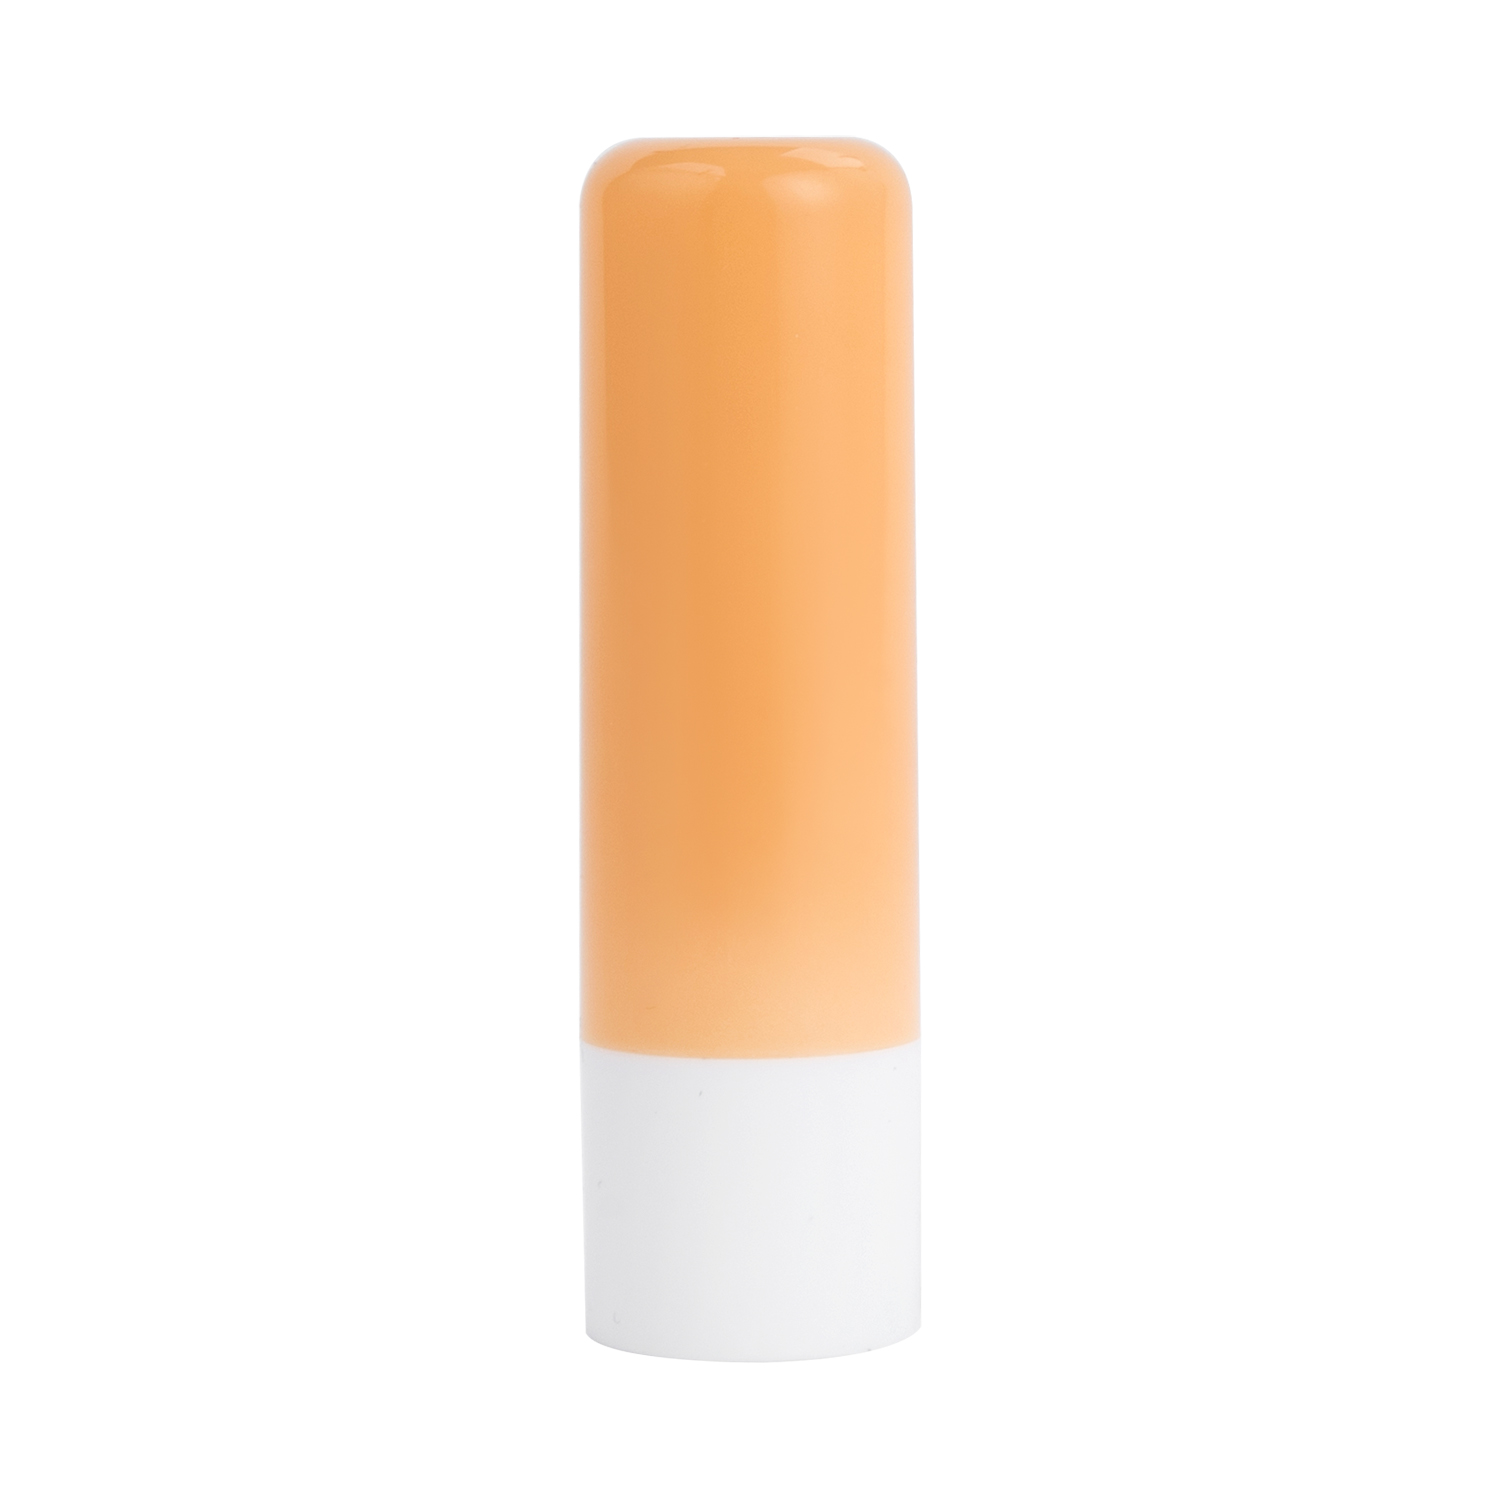 3.5g Simple Plastic Empty Lip Balm Container